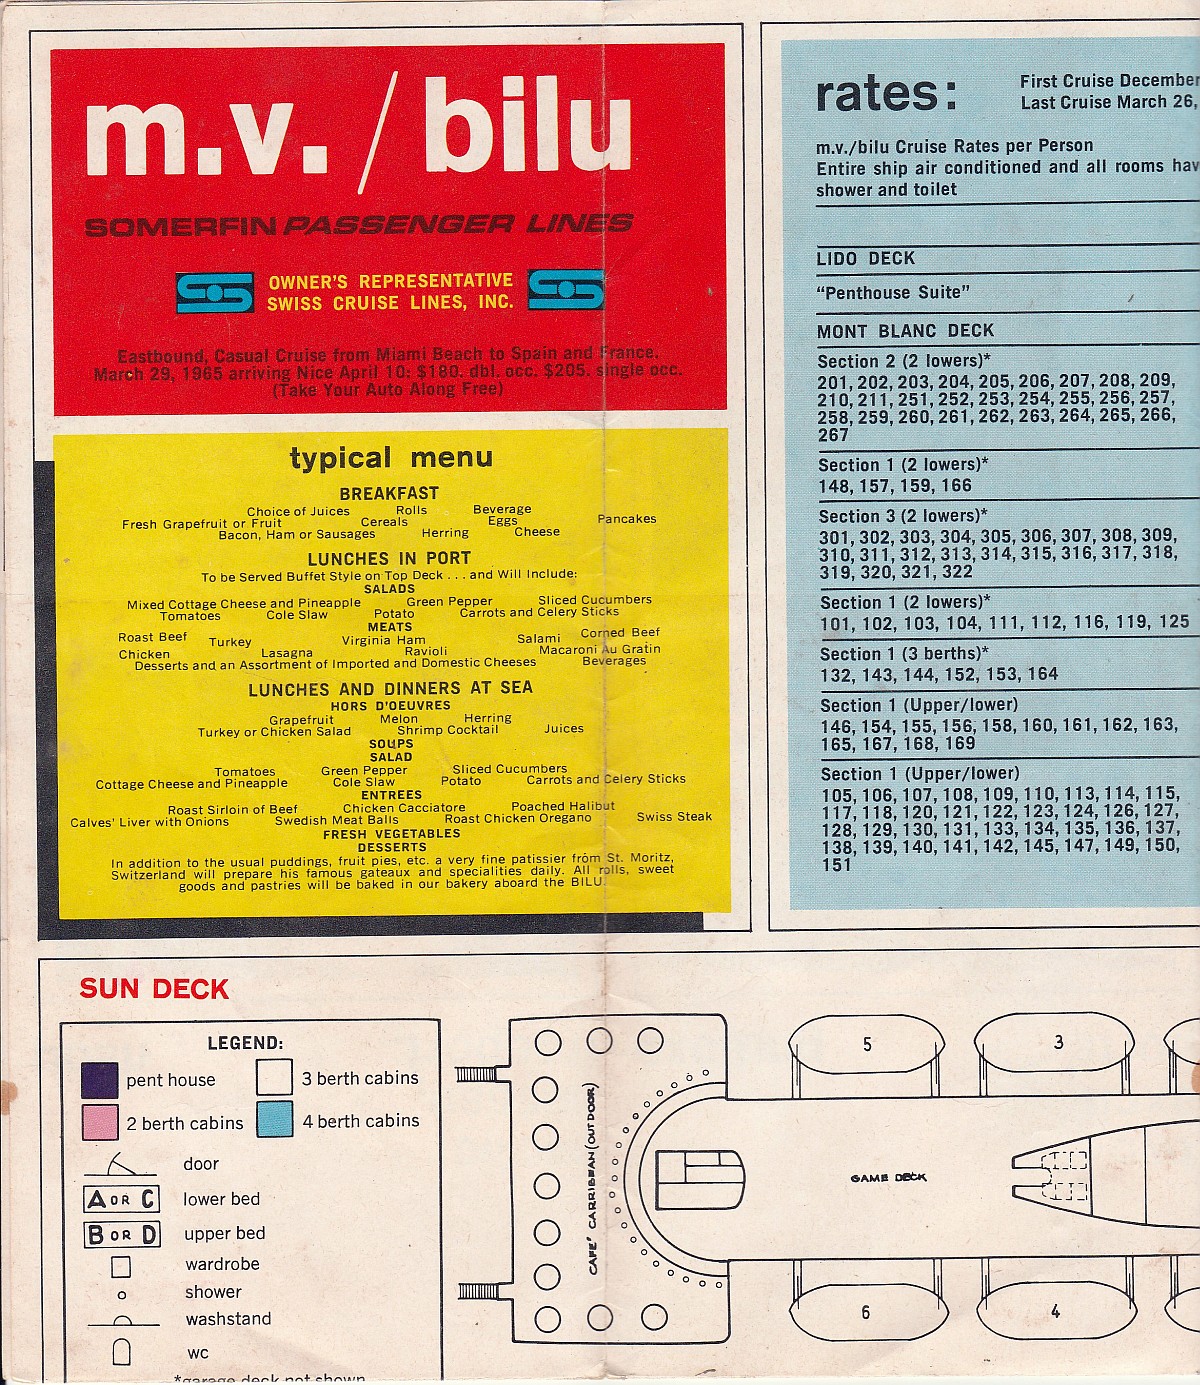 mv Bilu Information and deck plan: Typical menu, rates and Sun deck plan